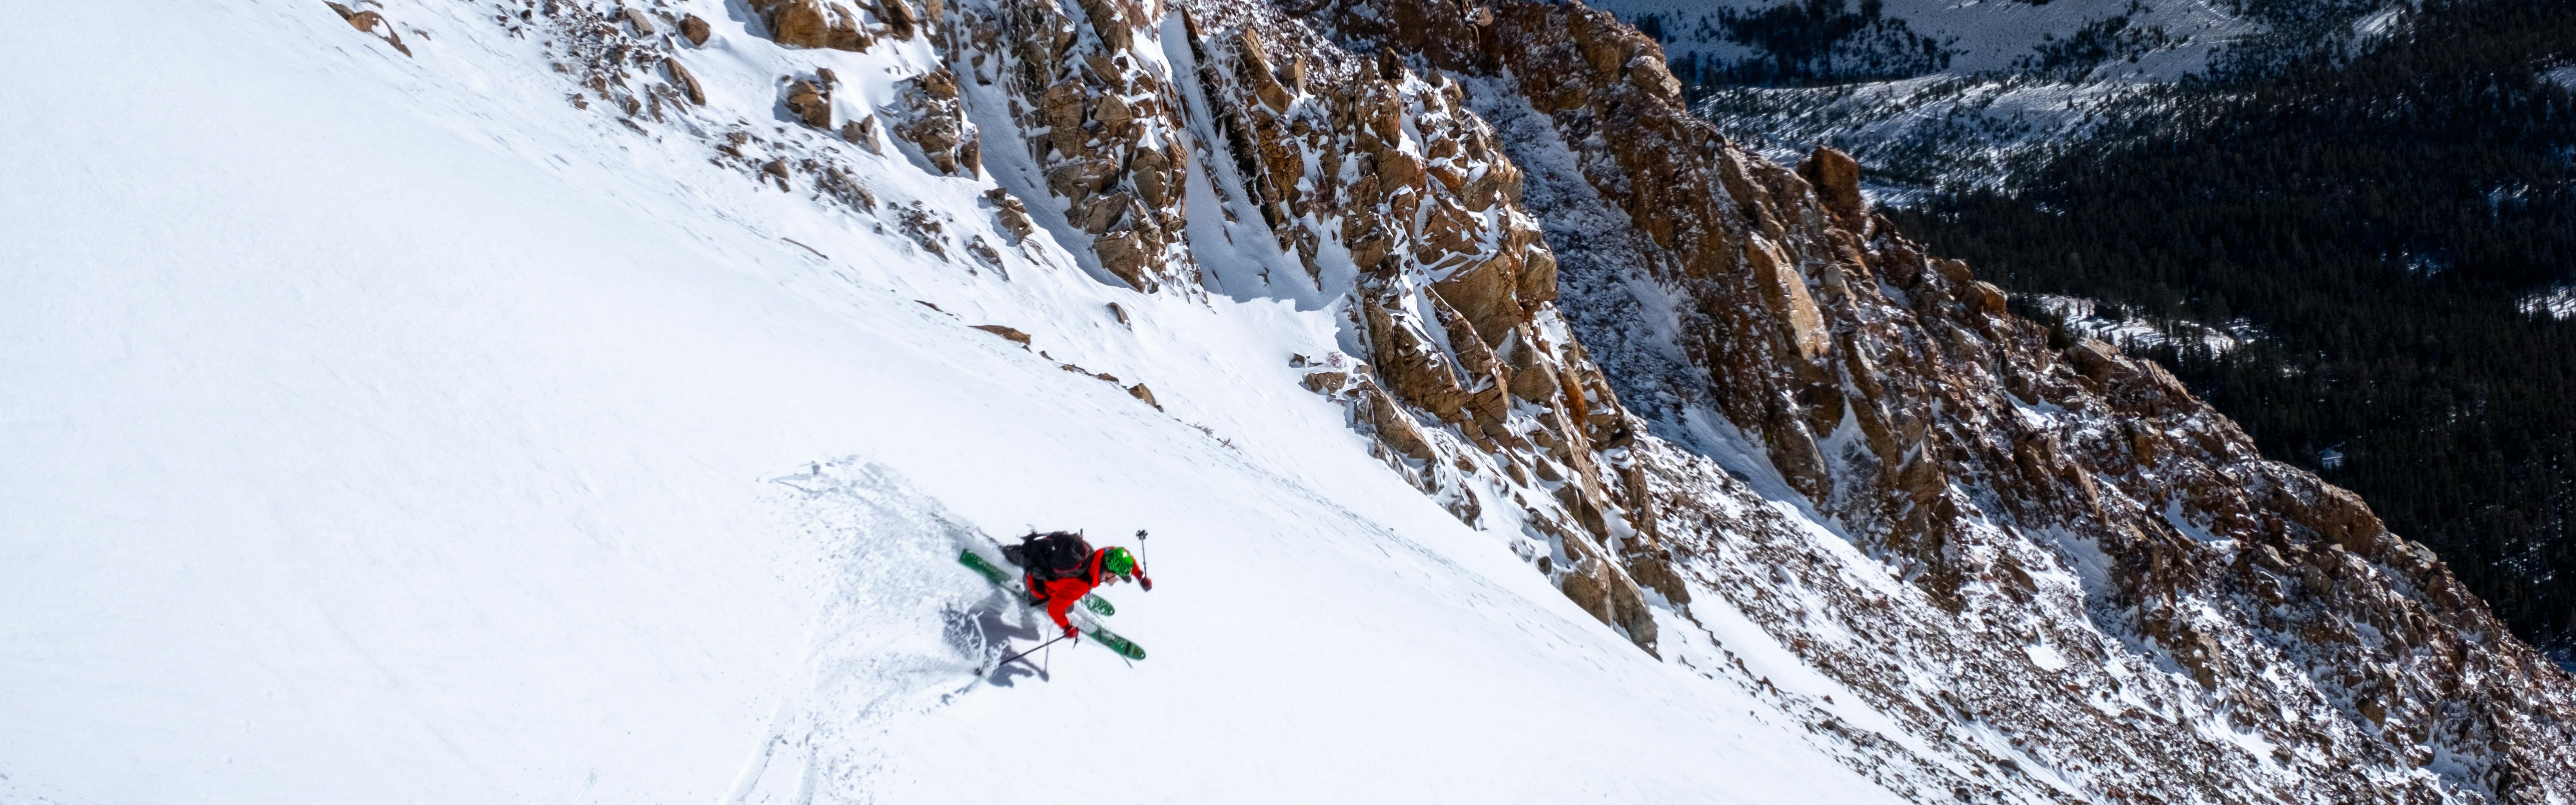 skiier in red jacket descending steep hill in powder